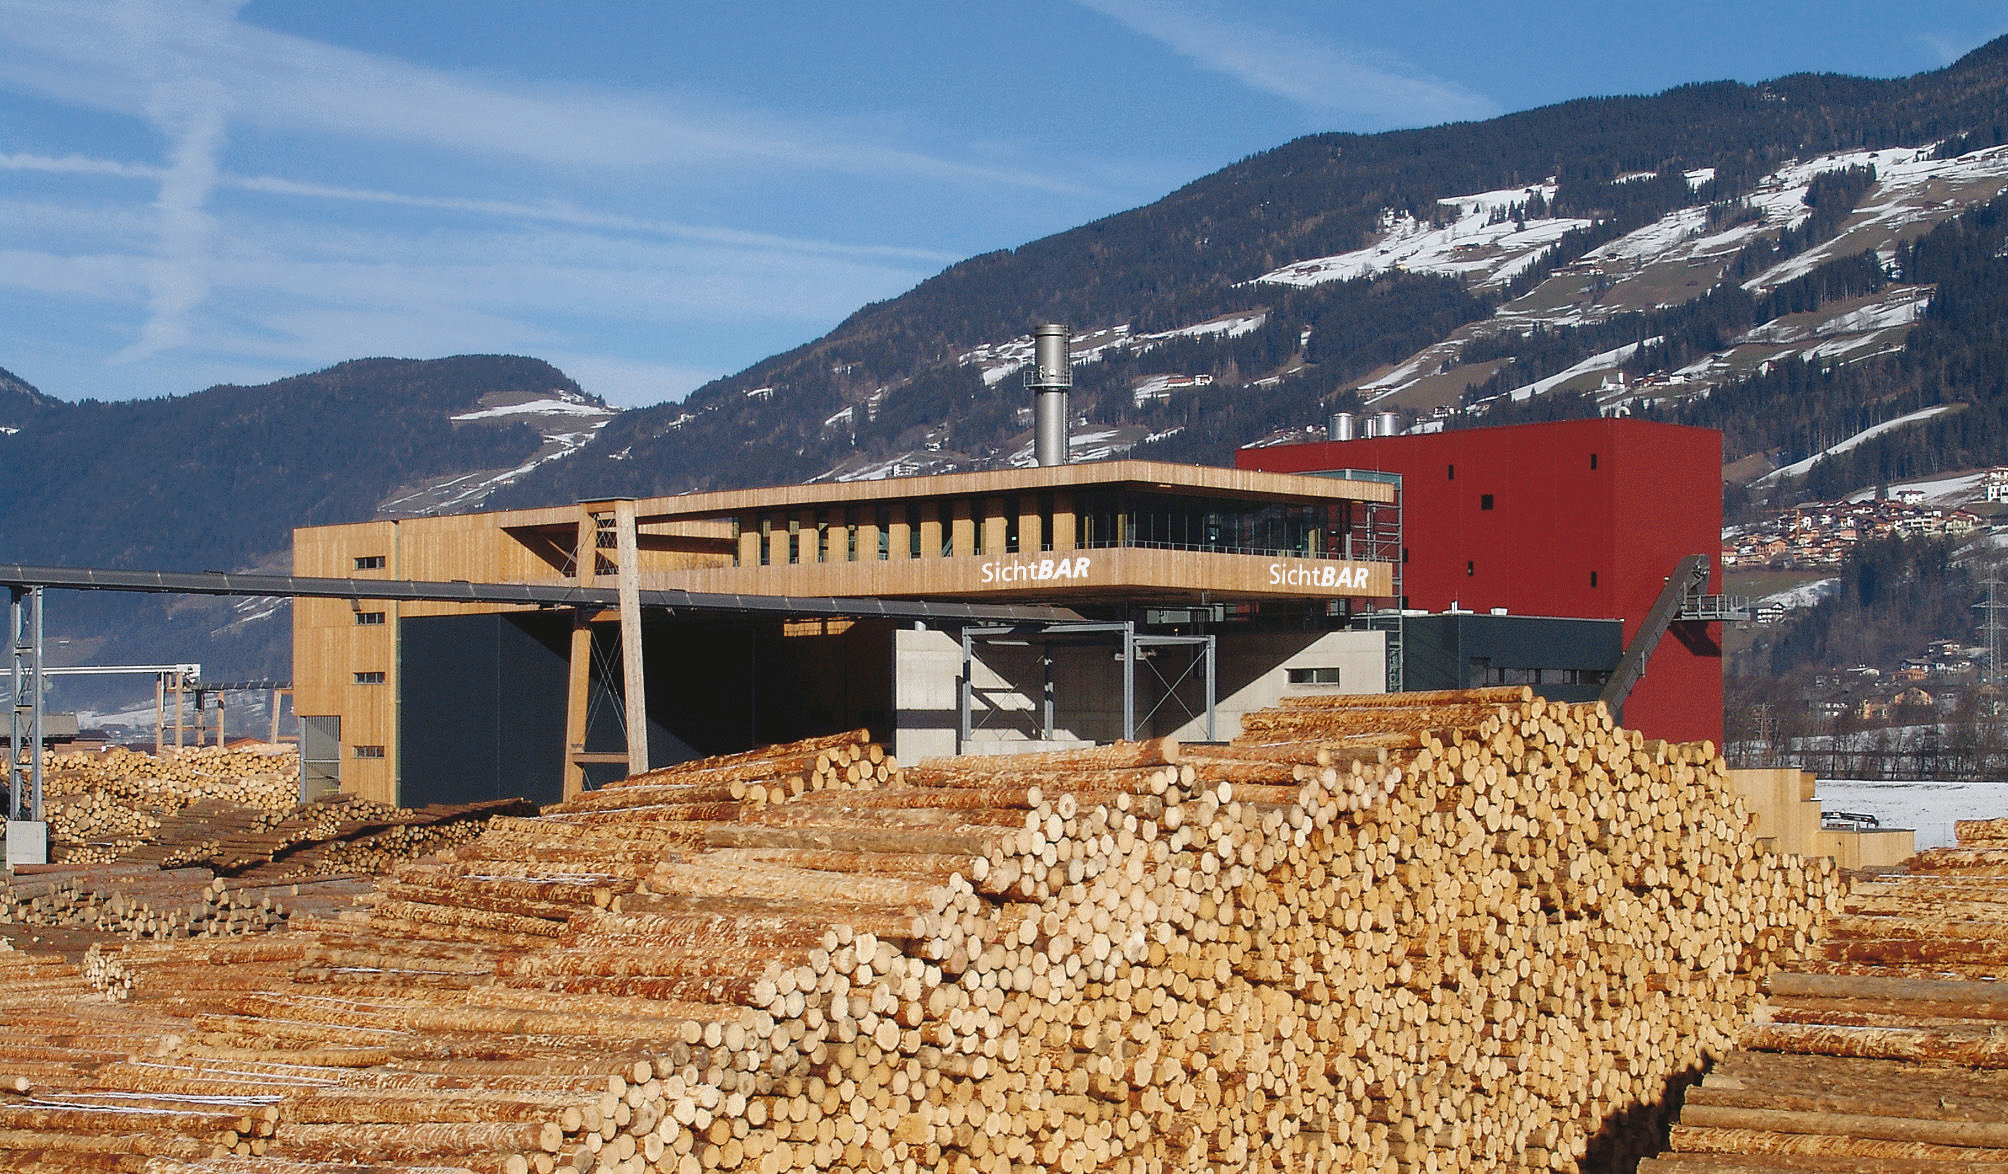 klausner-binderholz-lumber.gif